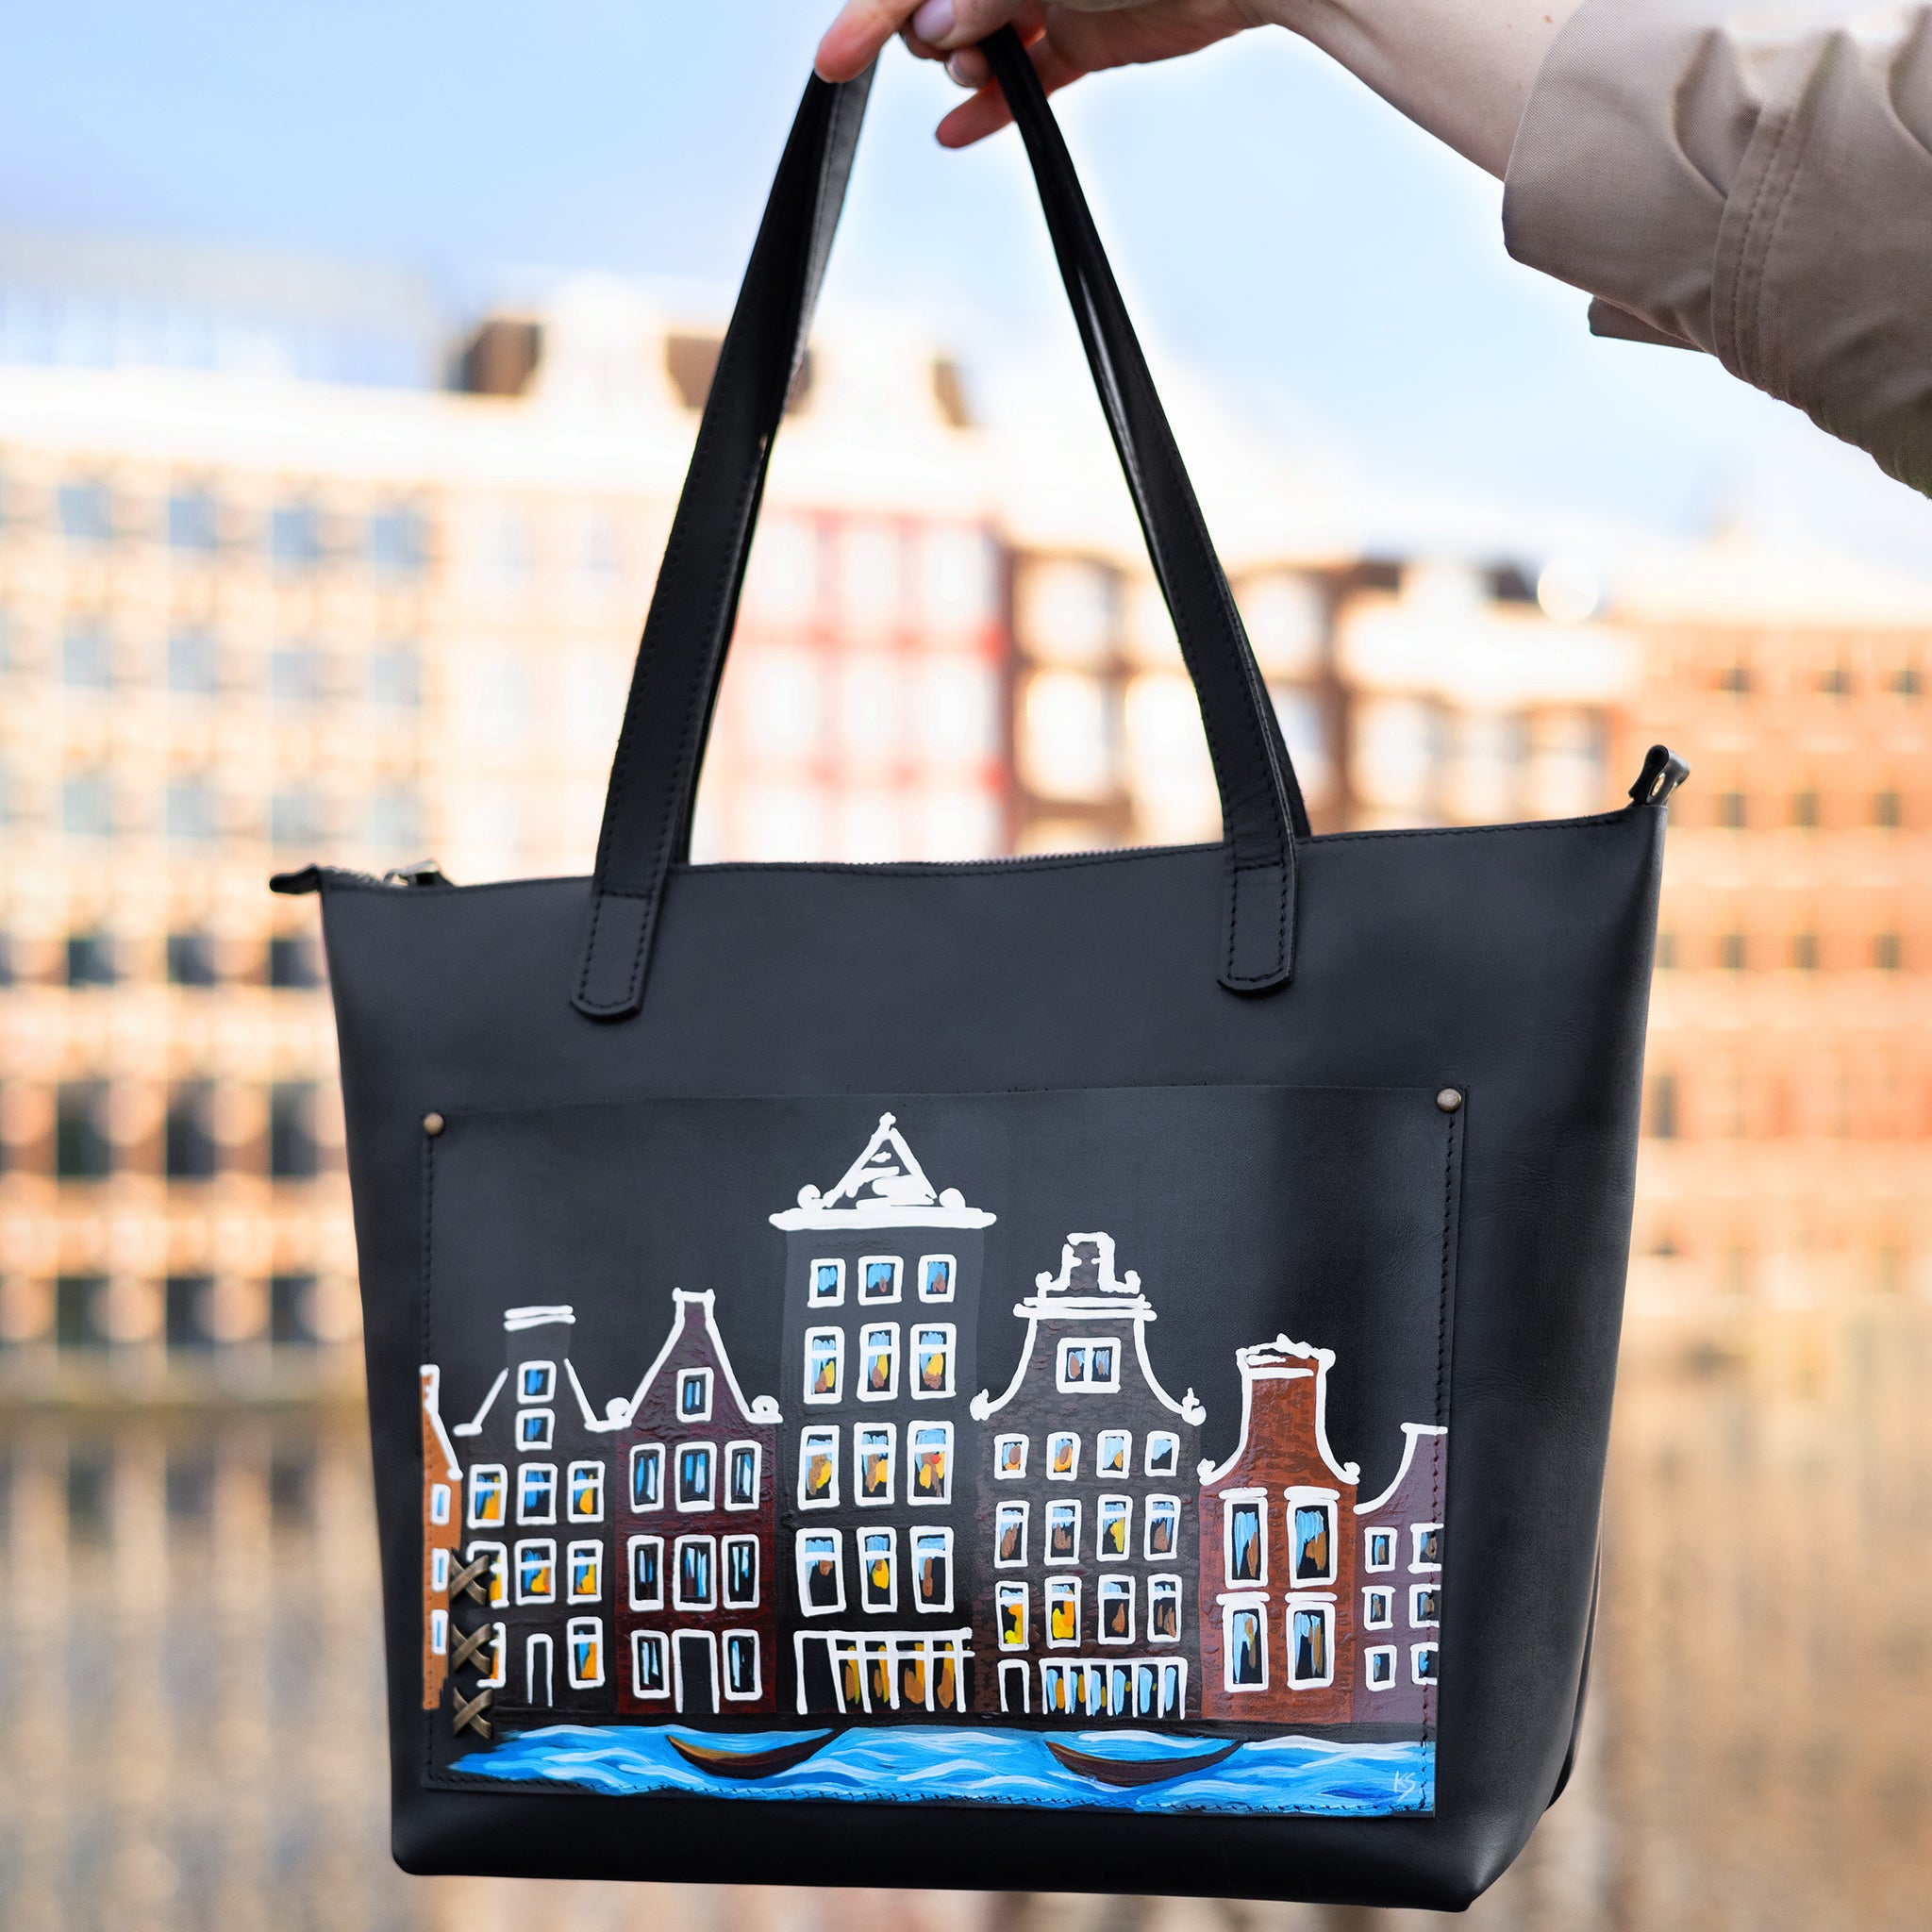 Leather Tote - Essentials Amsterdam Illustrated Design